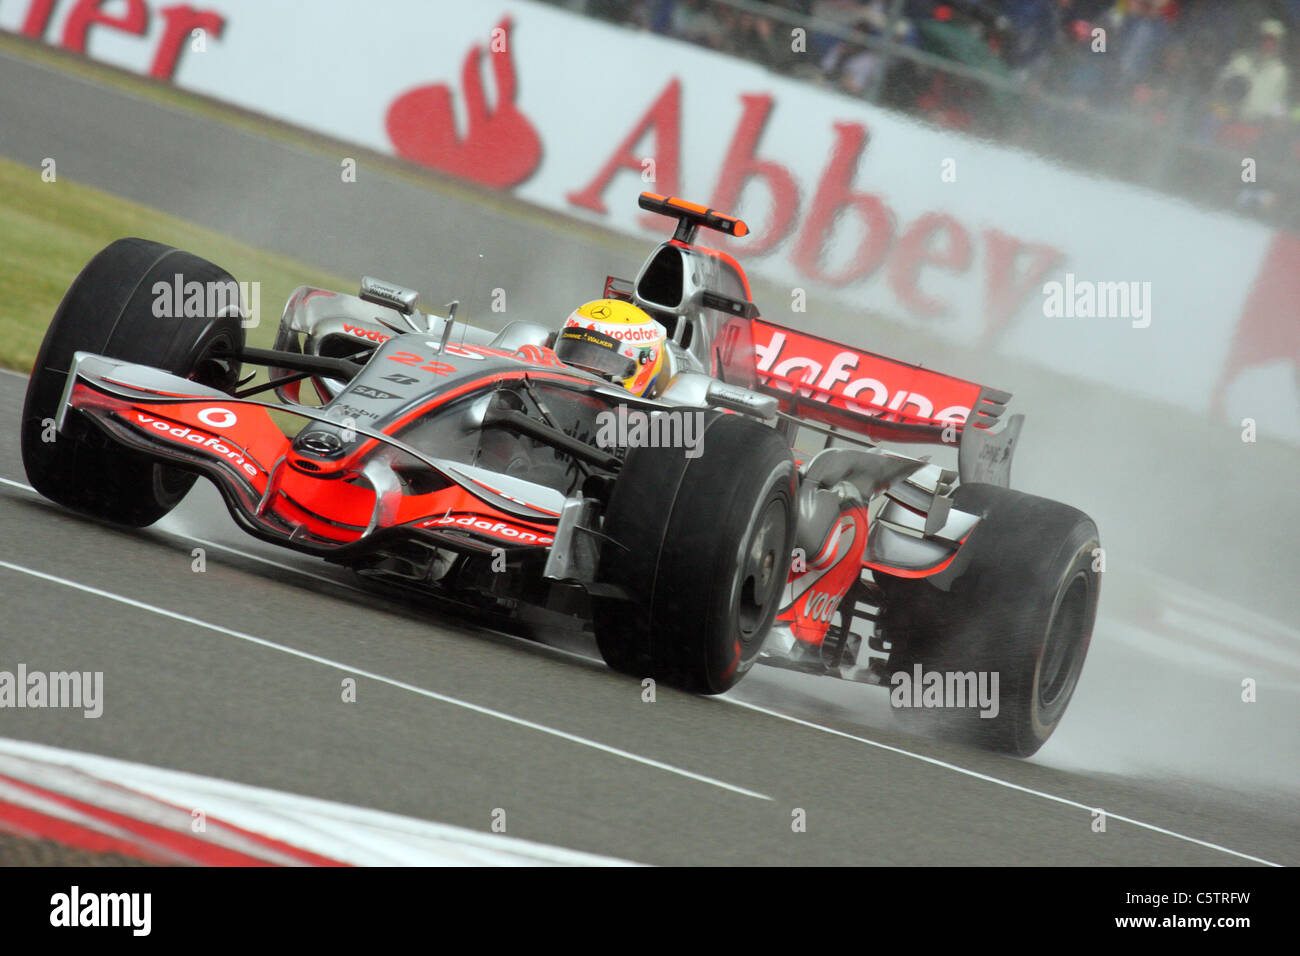 Lewis Hamilton battles with the rain at Silverstone Stock Photo